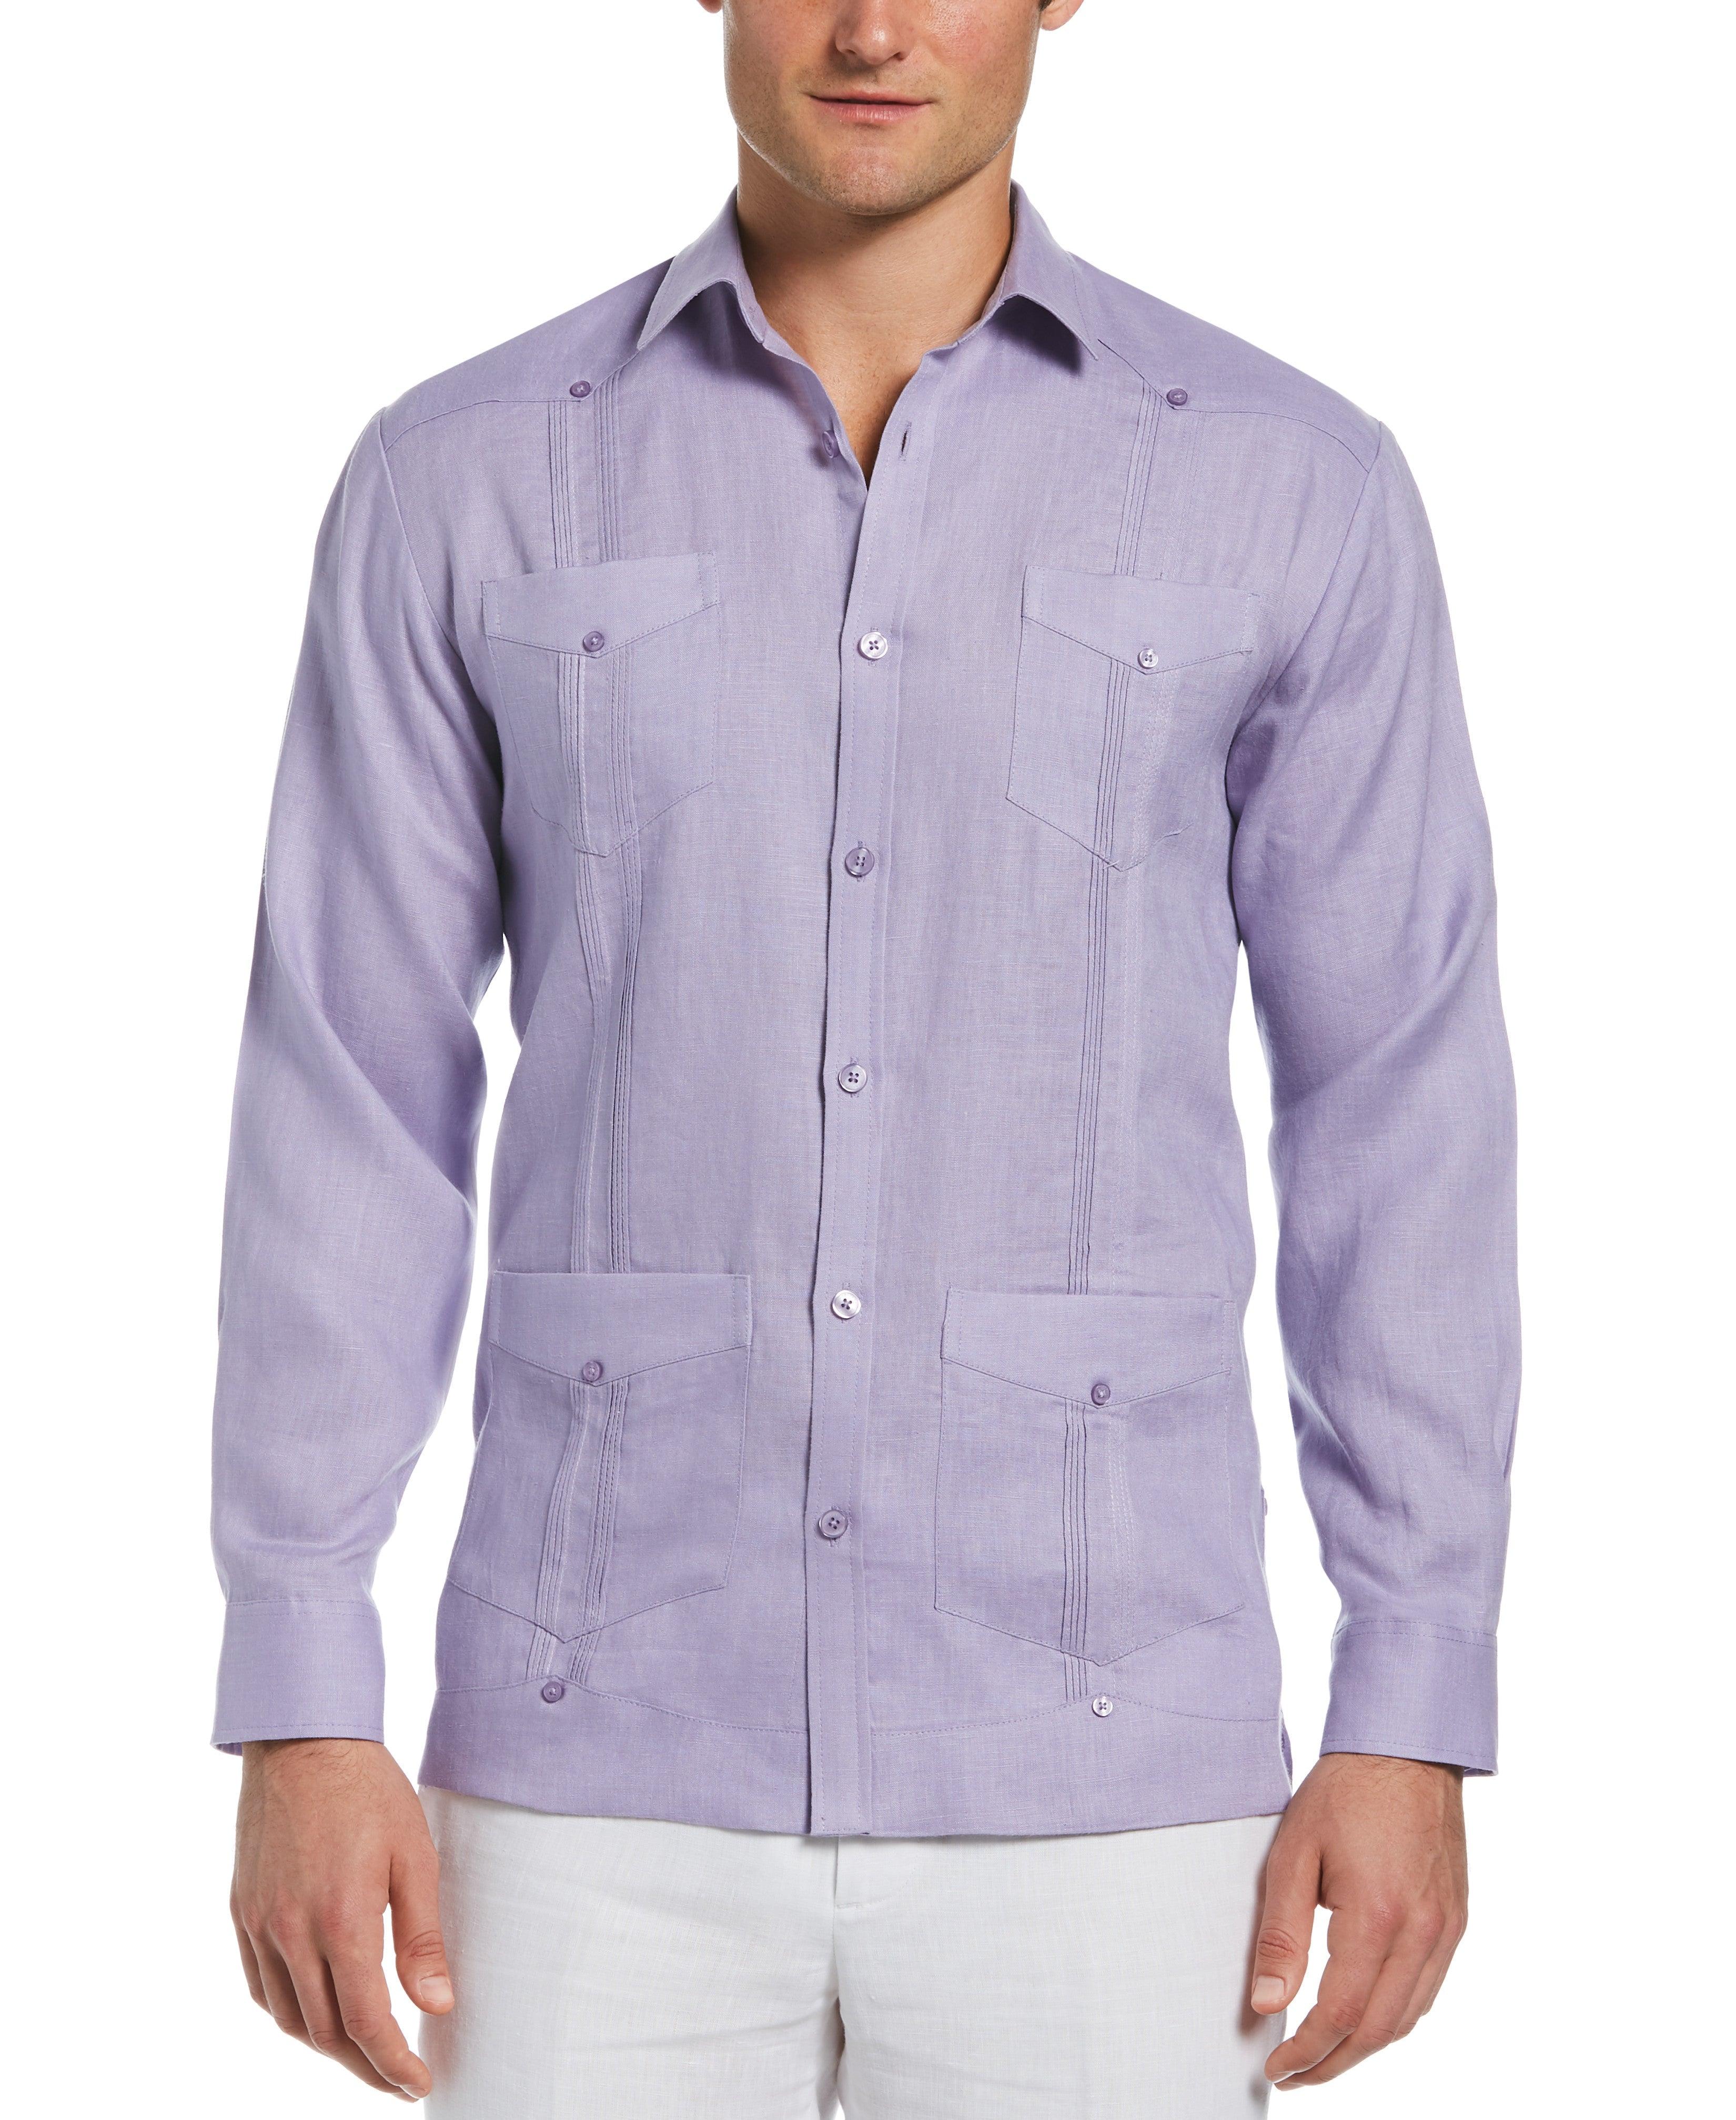 Cubavera 100% Linen Classic Guayabera Shirt - Long Sleeve in Purple | Lyst